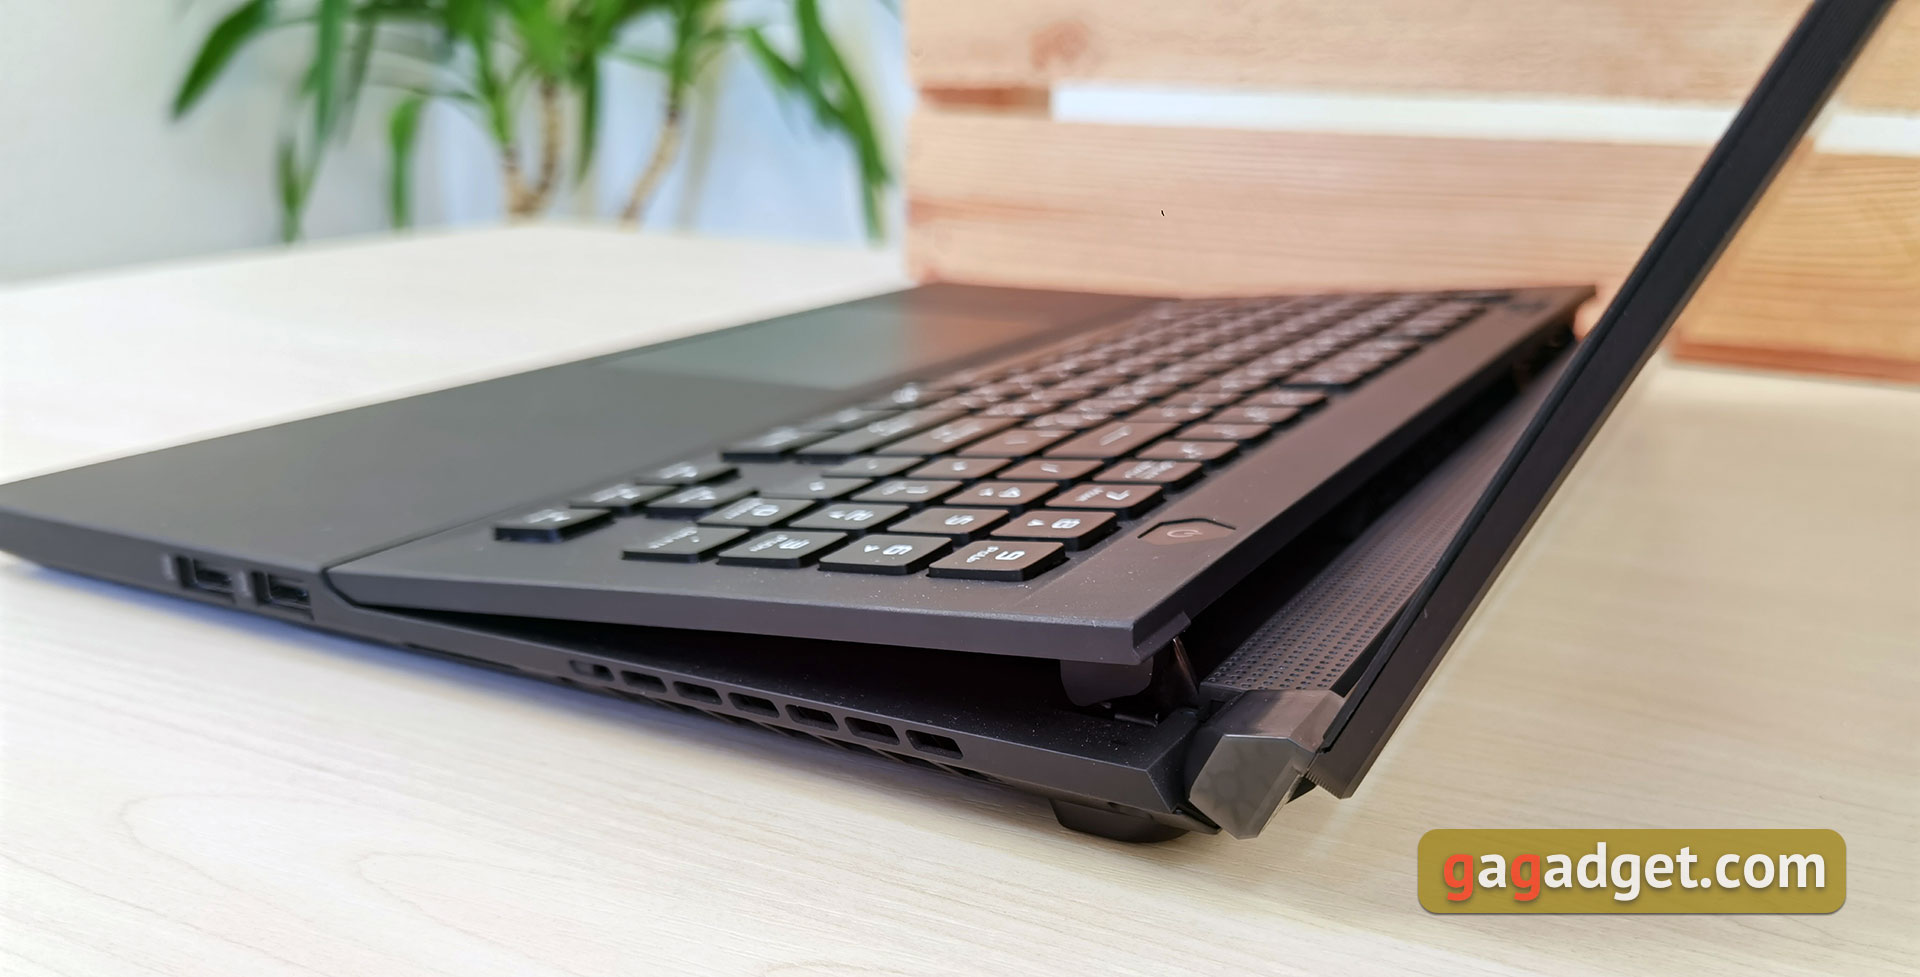 ASUS ROG Zephyrus S17 GX703 im Test: ein All-in-One-Gaming-Laptop-14